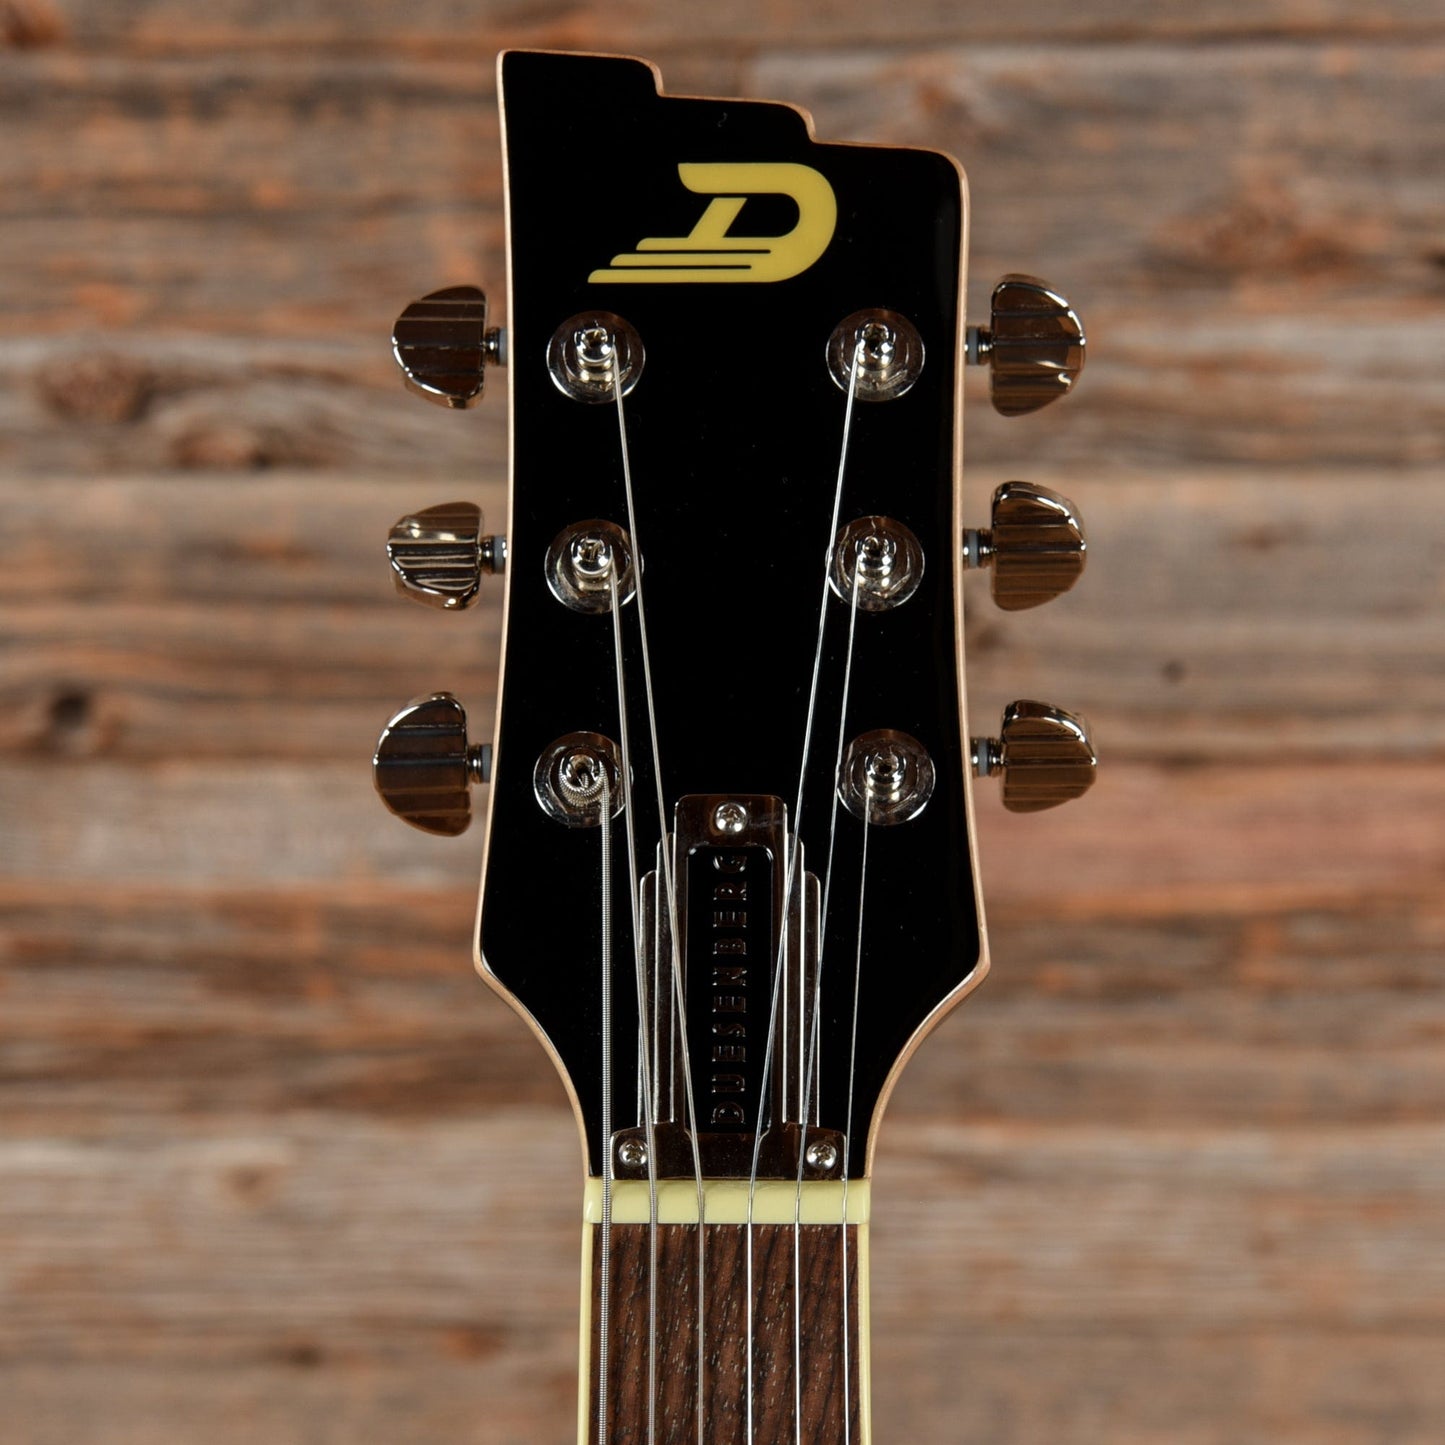 Duesenberg Starplayer TV Electric Guitar Gold Electric Guitars / Semi-Hollow